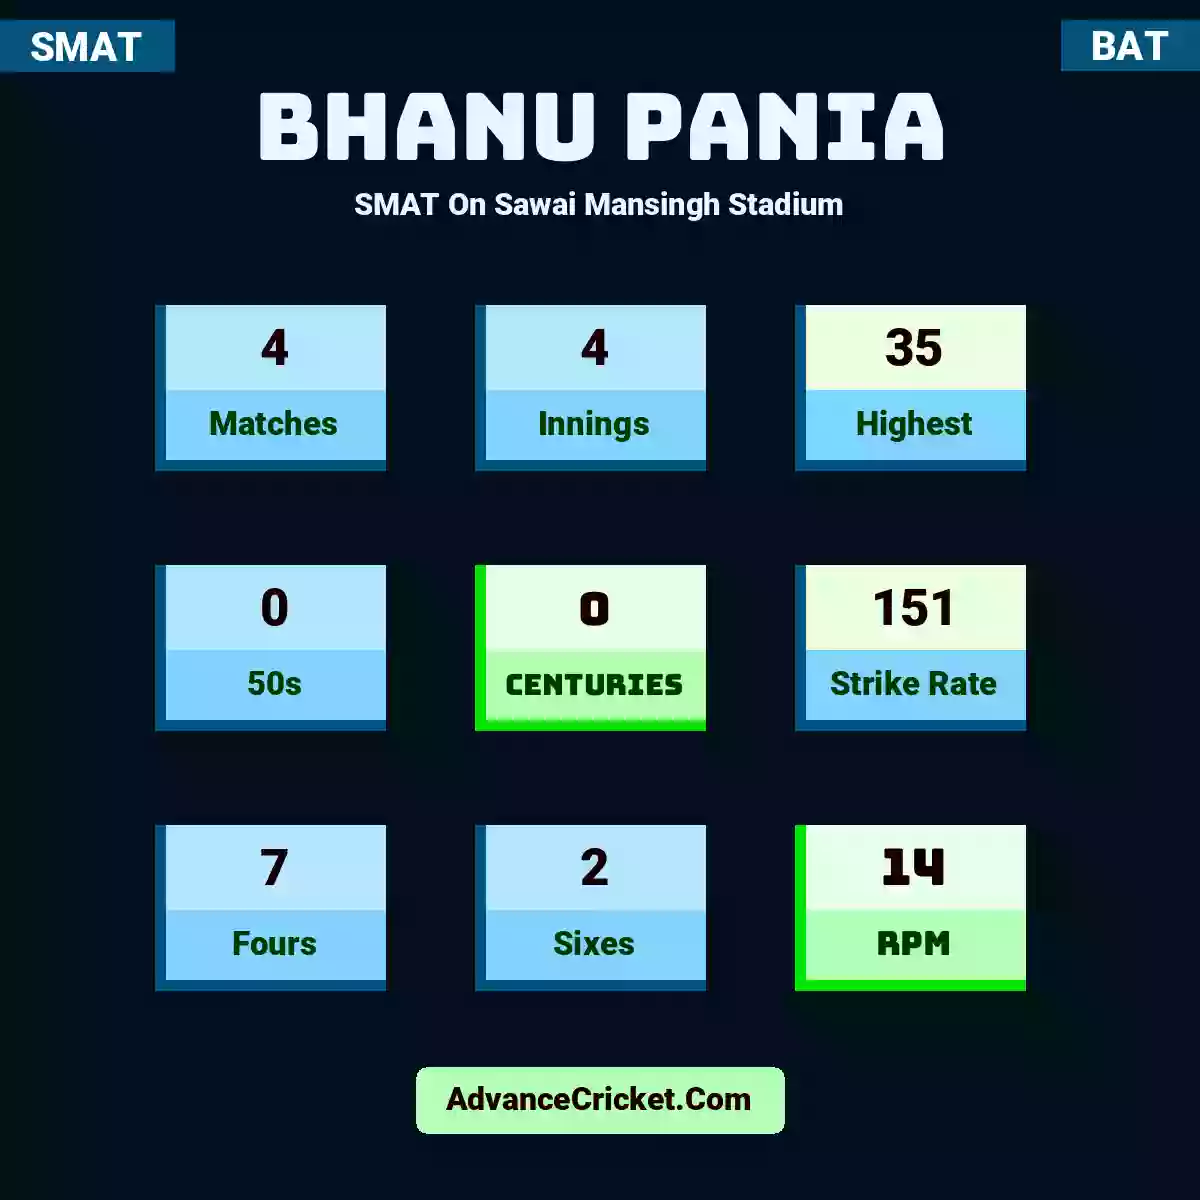 Bhanu Pania SMAT  On Sawai Mansingh Stadium, Bhanu Pania played 4 matches, scored 35 runs as highest, 0 half-centuries, and 0 centuries, with a strike rate of 151. B.Pania hit 7 fours and 2 sixes, with an RPM of 14.